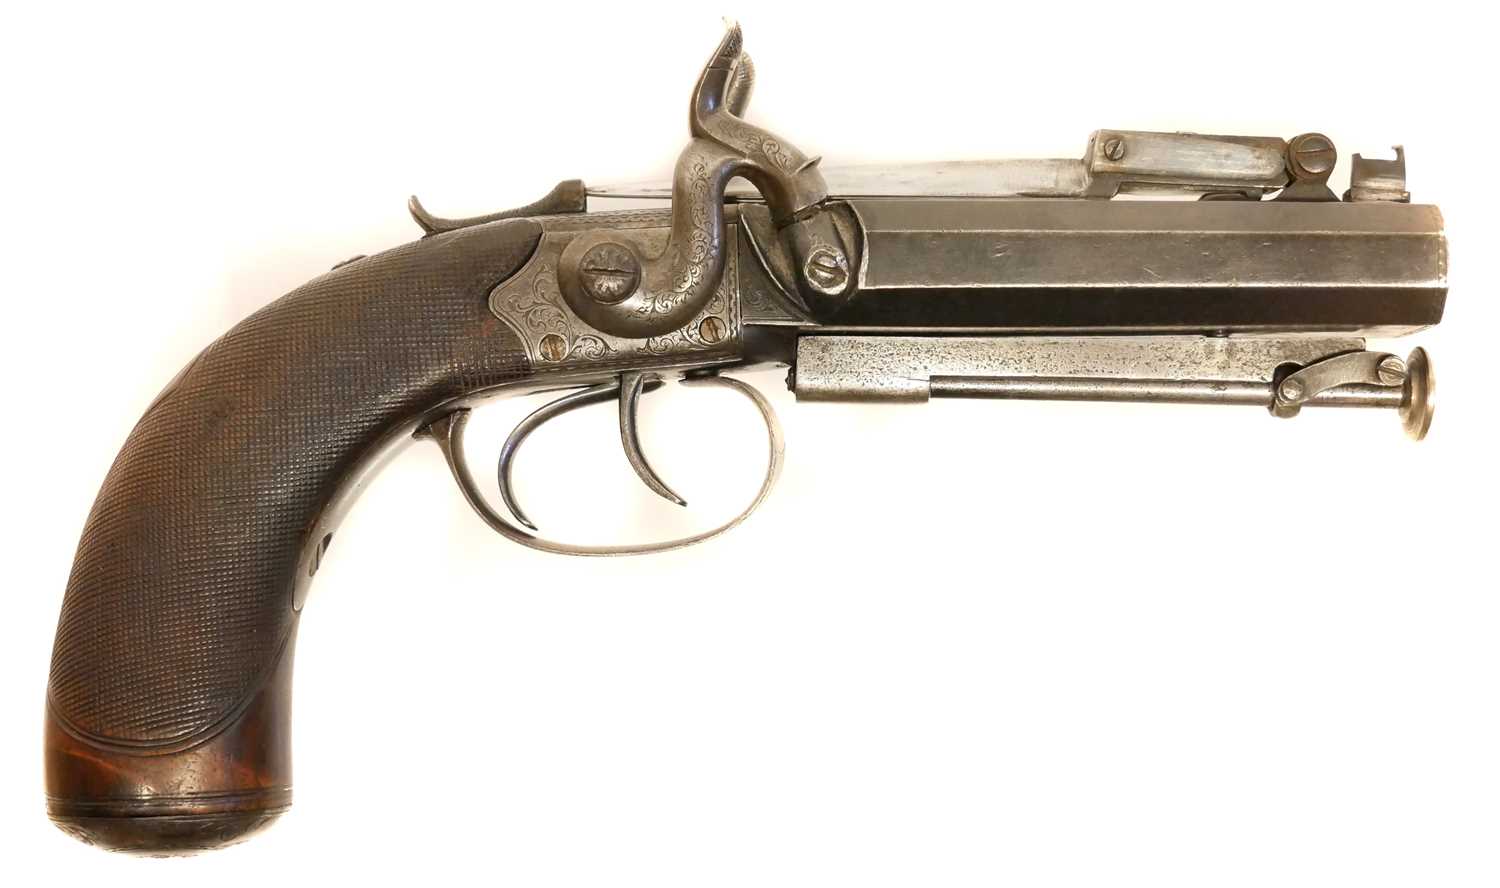 Lot 2 - Atkinson of Lancaster double barrel pistol with bayonet